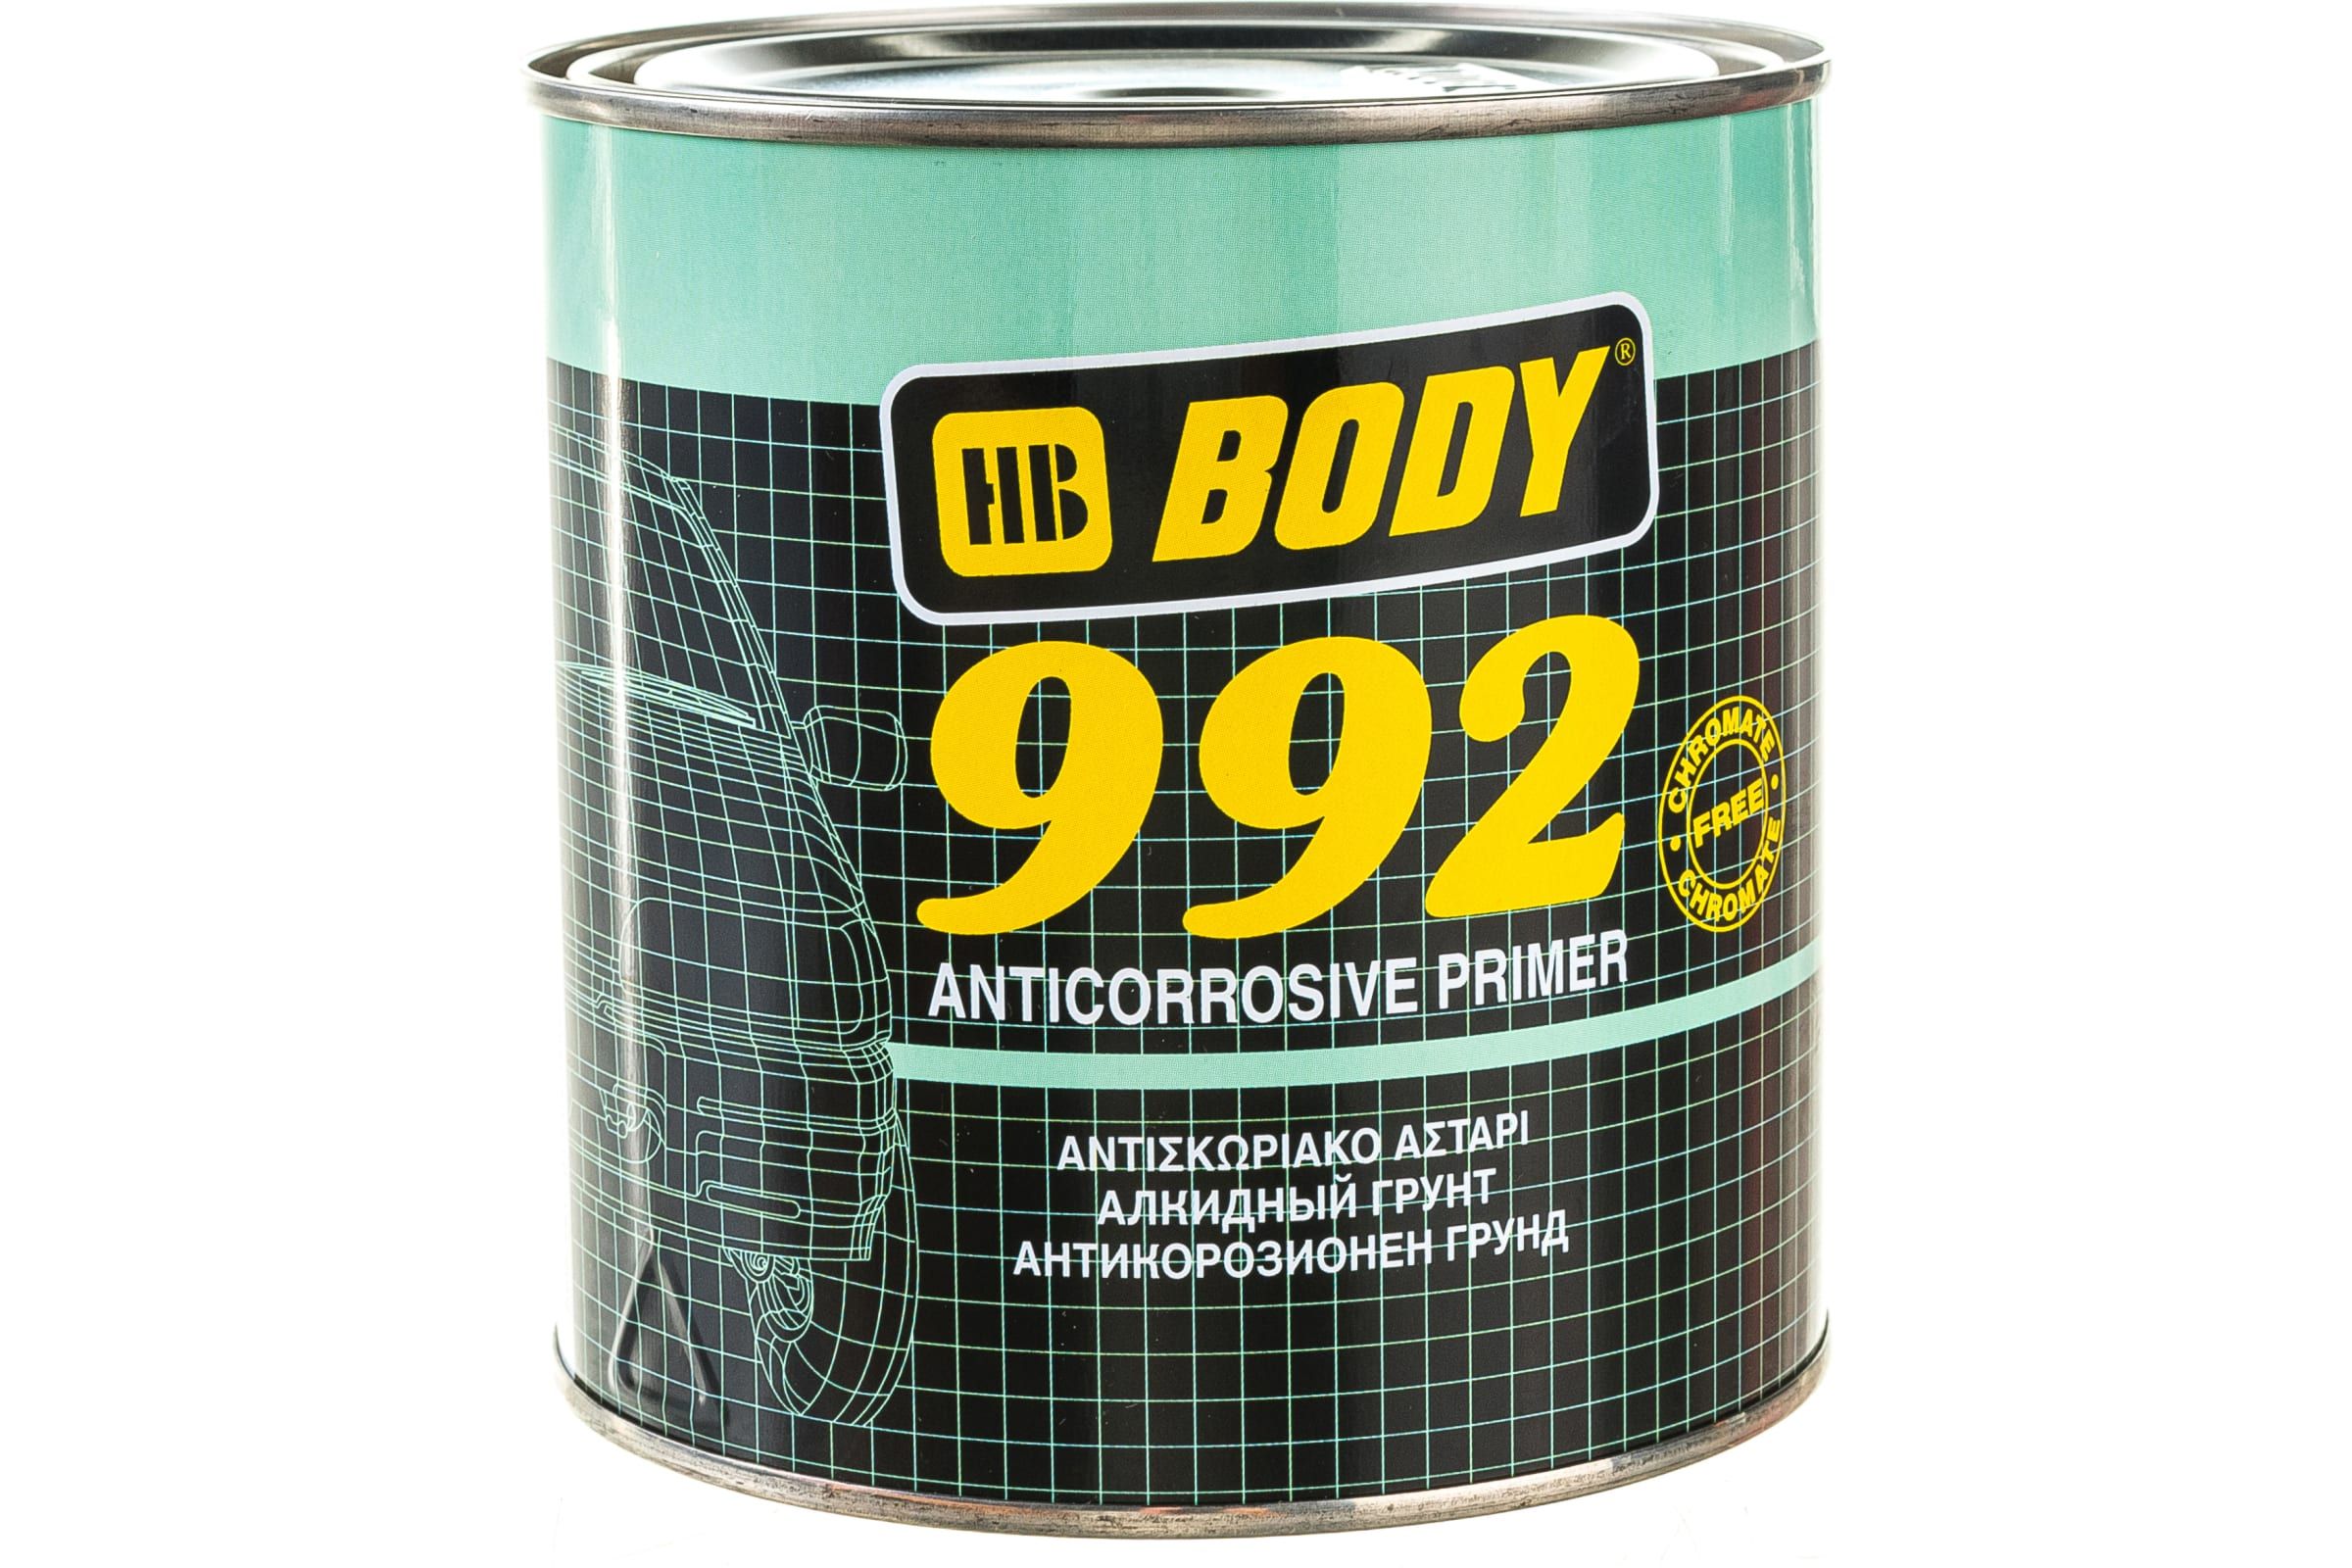 Body 992. Грунт HB body 962 1k isolator primer серо-зелёный, уп.1л. Грунт боди. Грунт антикоррозийный для авто белый. Body primer по пластику.